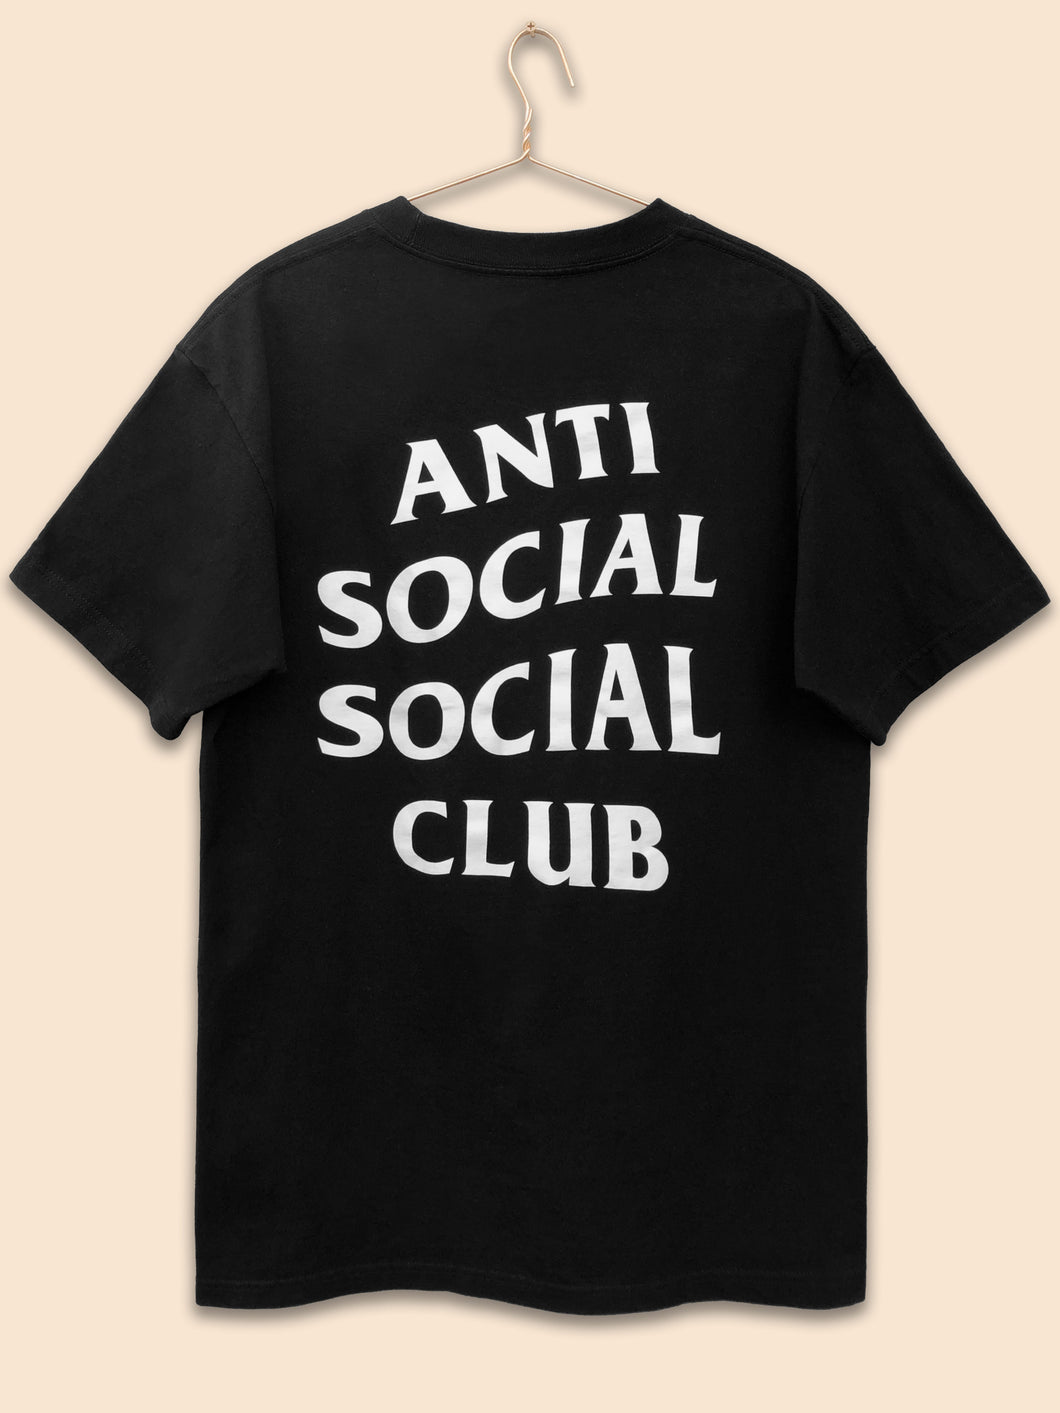 Anti Social Social Club Mind Games T-Shirt Black (L)